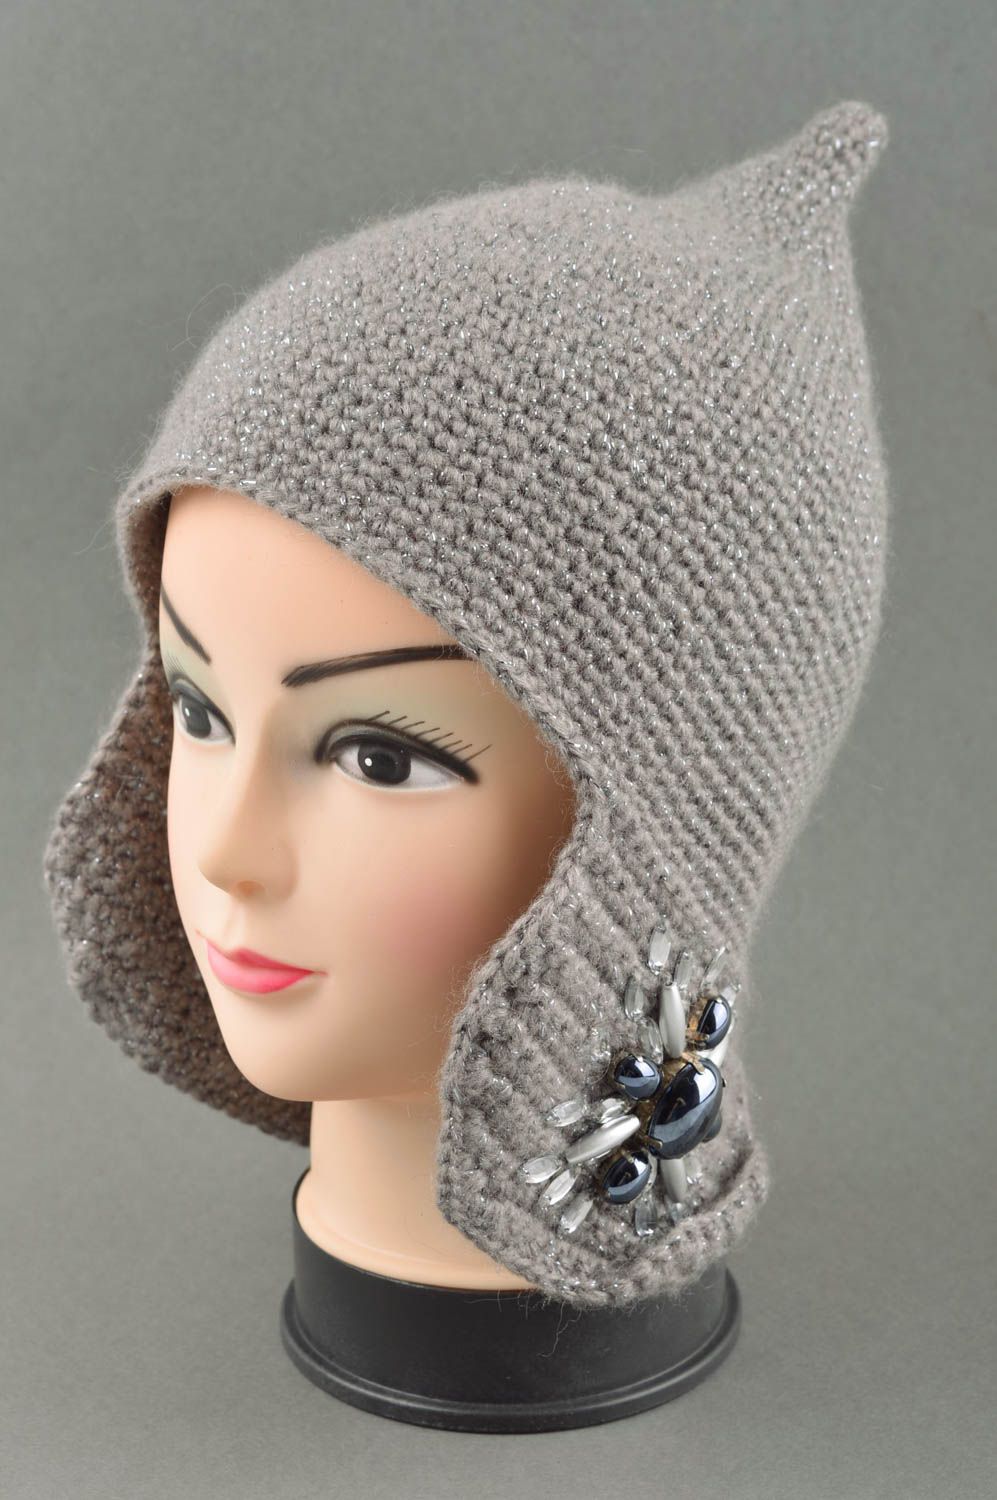 Handmade designer female cap unusual knitted hat stylish winter accessory photo 1